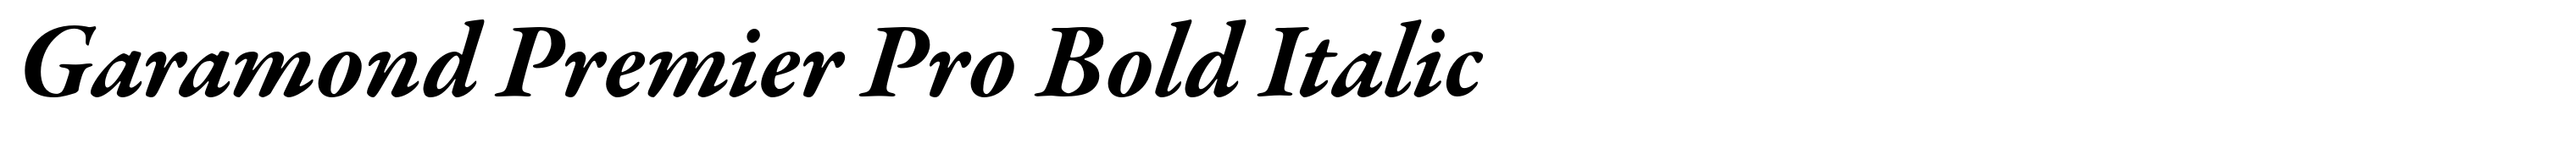 Garamond Premier Pro Bold Italic